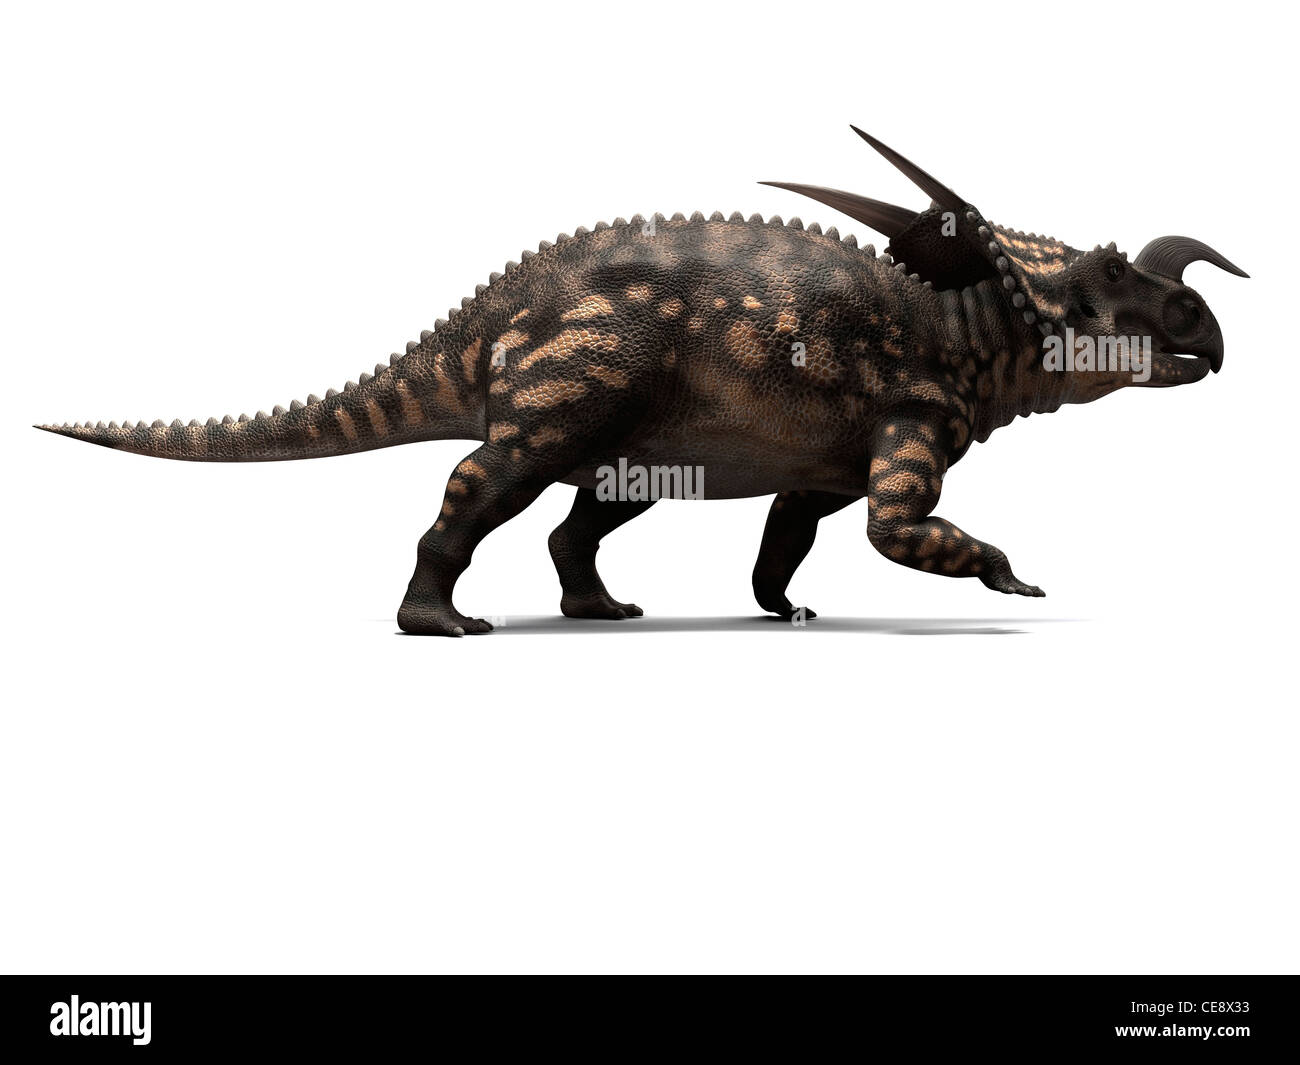 Einiosaurus dinosaur, computer artwork. This dinosaur lived 65 to 100 million years ago during the Late Cretaceous period. Stock Photo